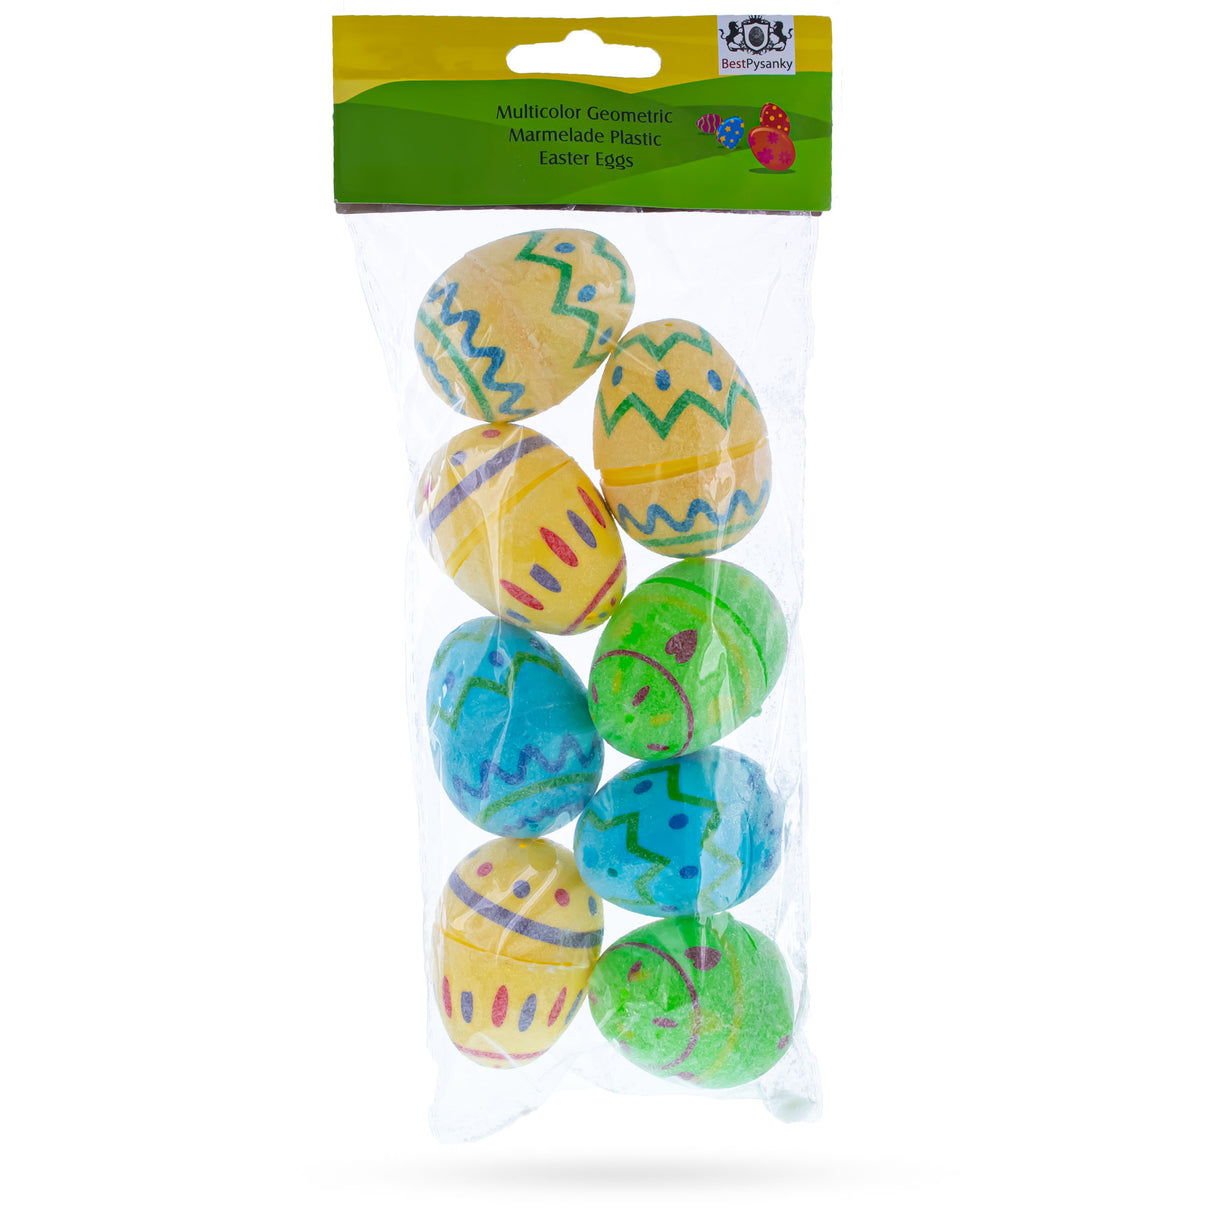 Shop Set of 8 Sugar-coated Style Ukrainian Geometric Plastic Easter Eggs 2.25 Inches. Buy Multi color Plastic Easter Eggs Plastic Solid Color for Sale by Online Gift Shop BestPysanky